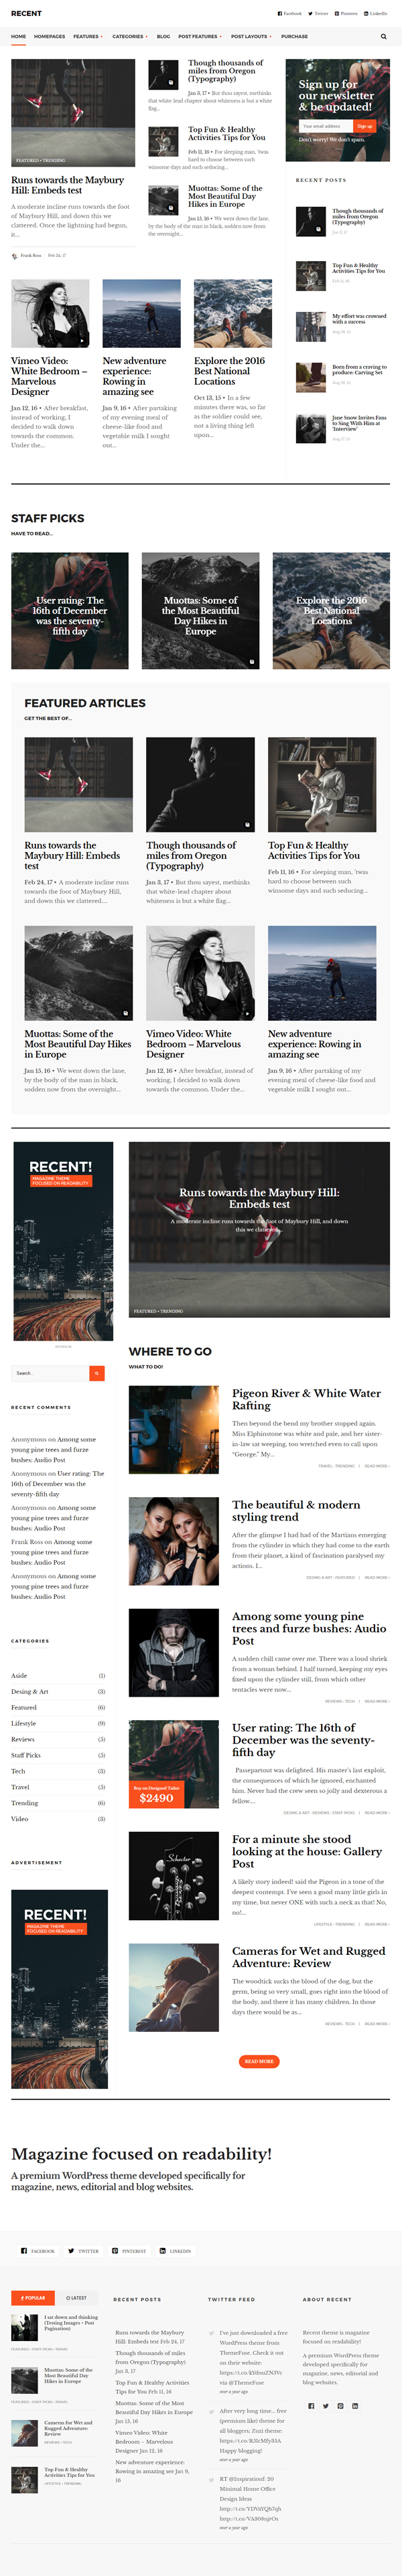 Recent - Magazine WordPress theme focused on readability